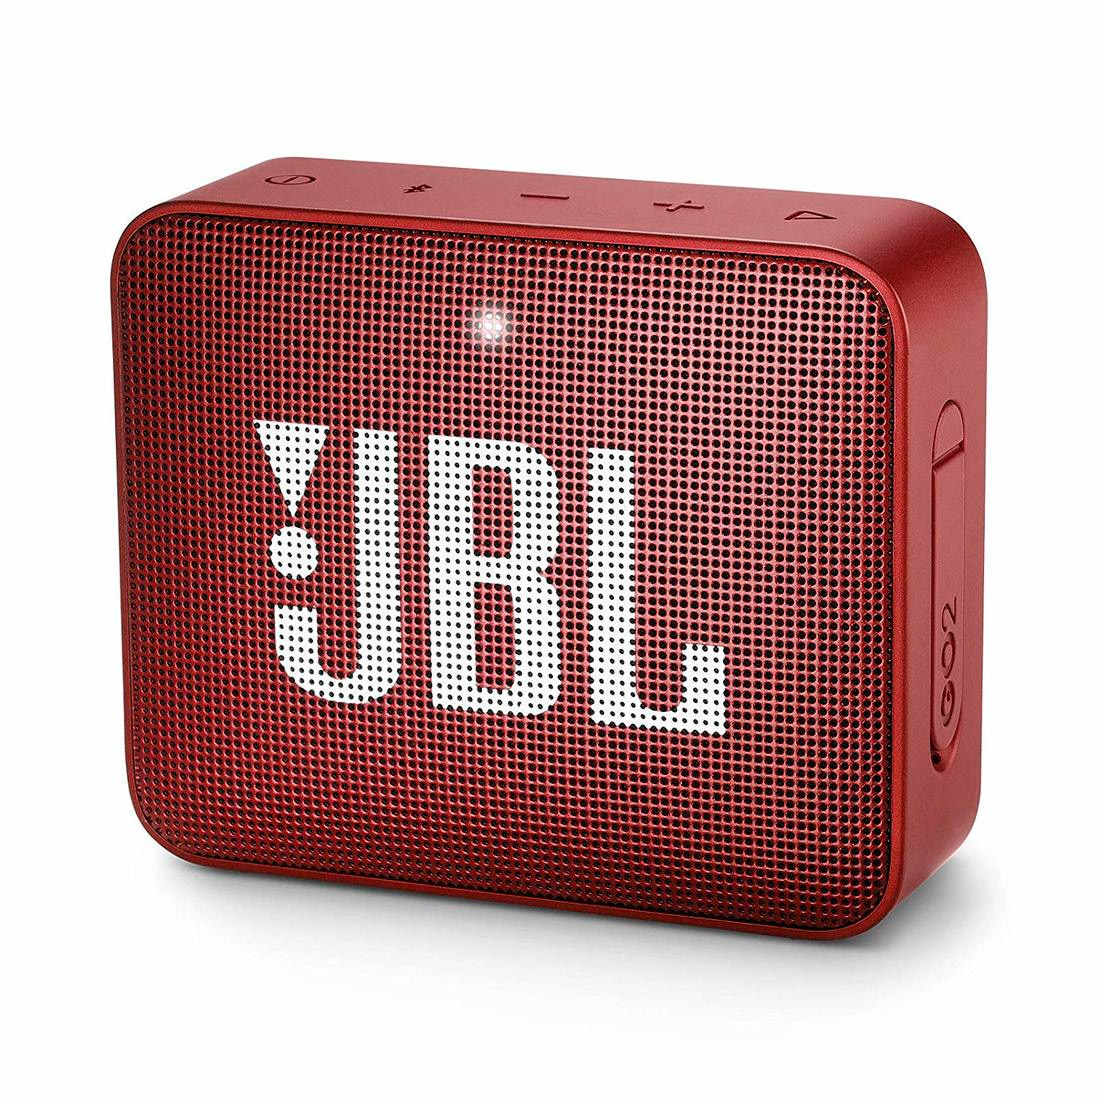 Parlante Portátil Sumergible Impermeable JBL GO 2 Color Rojo